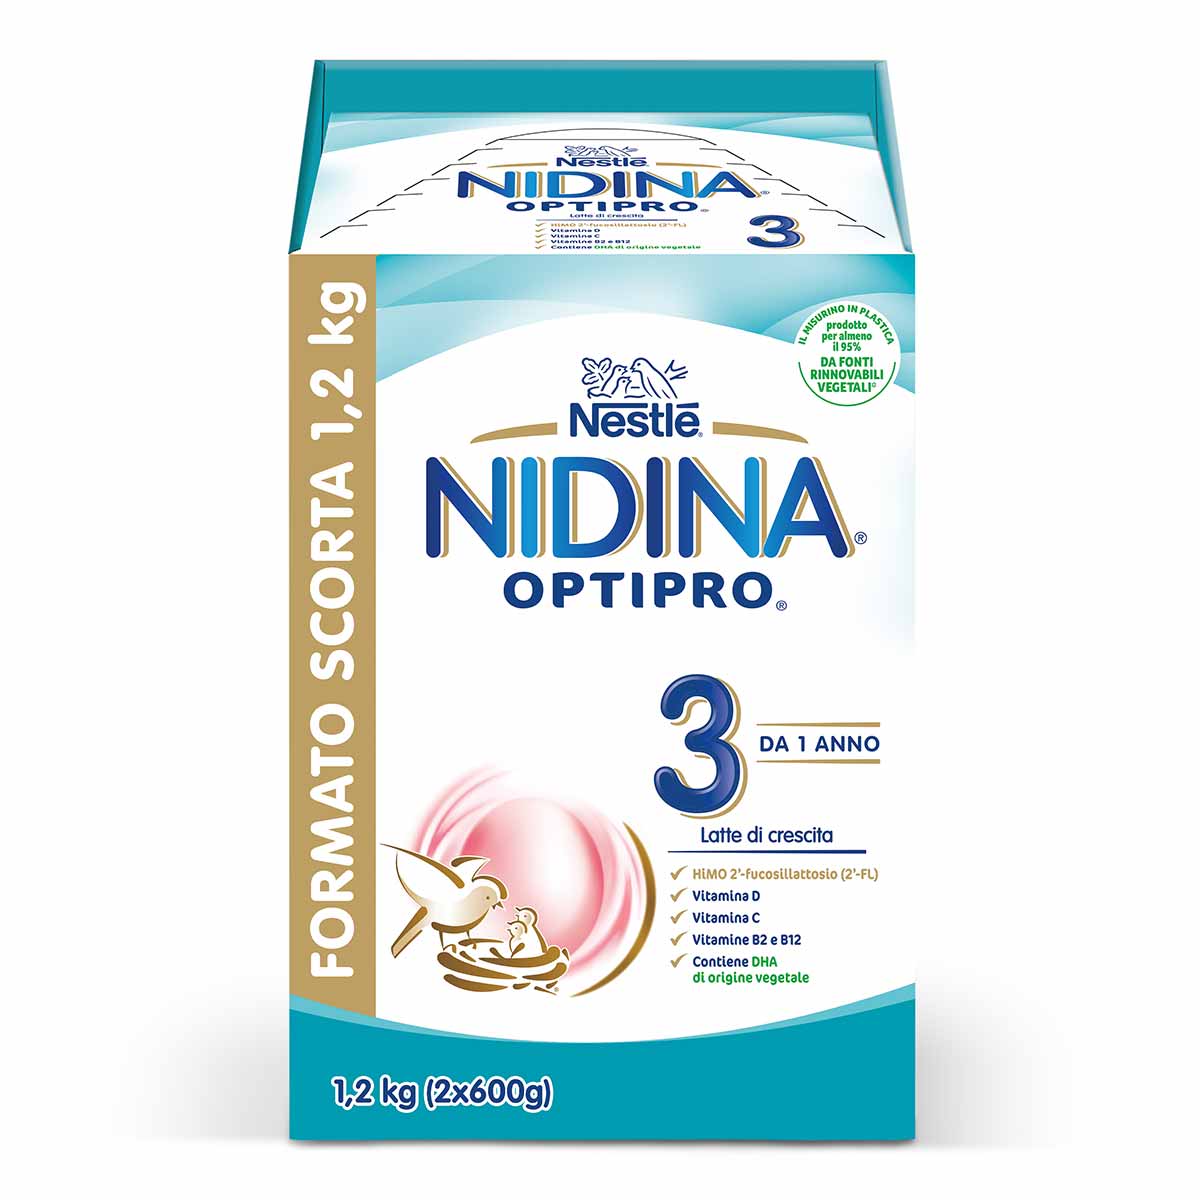 Nestlé NIDINA OPTIPRO 3 1.2kg (2x600g), Latte di crescitain polvere, dai 12 mesi